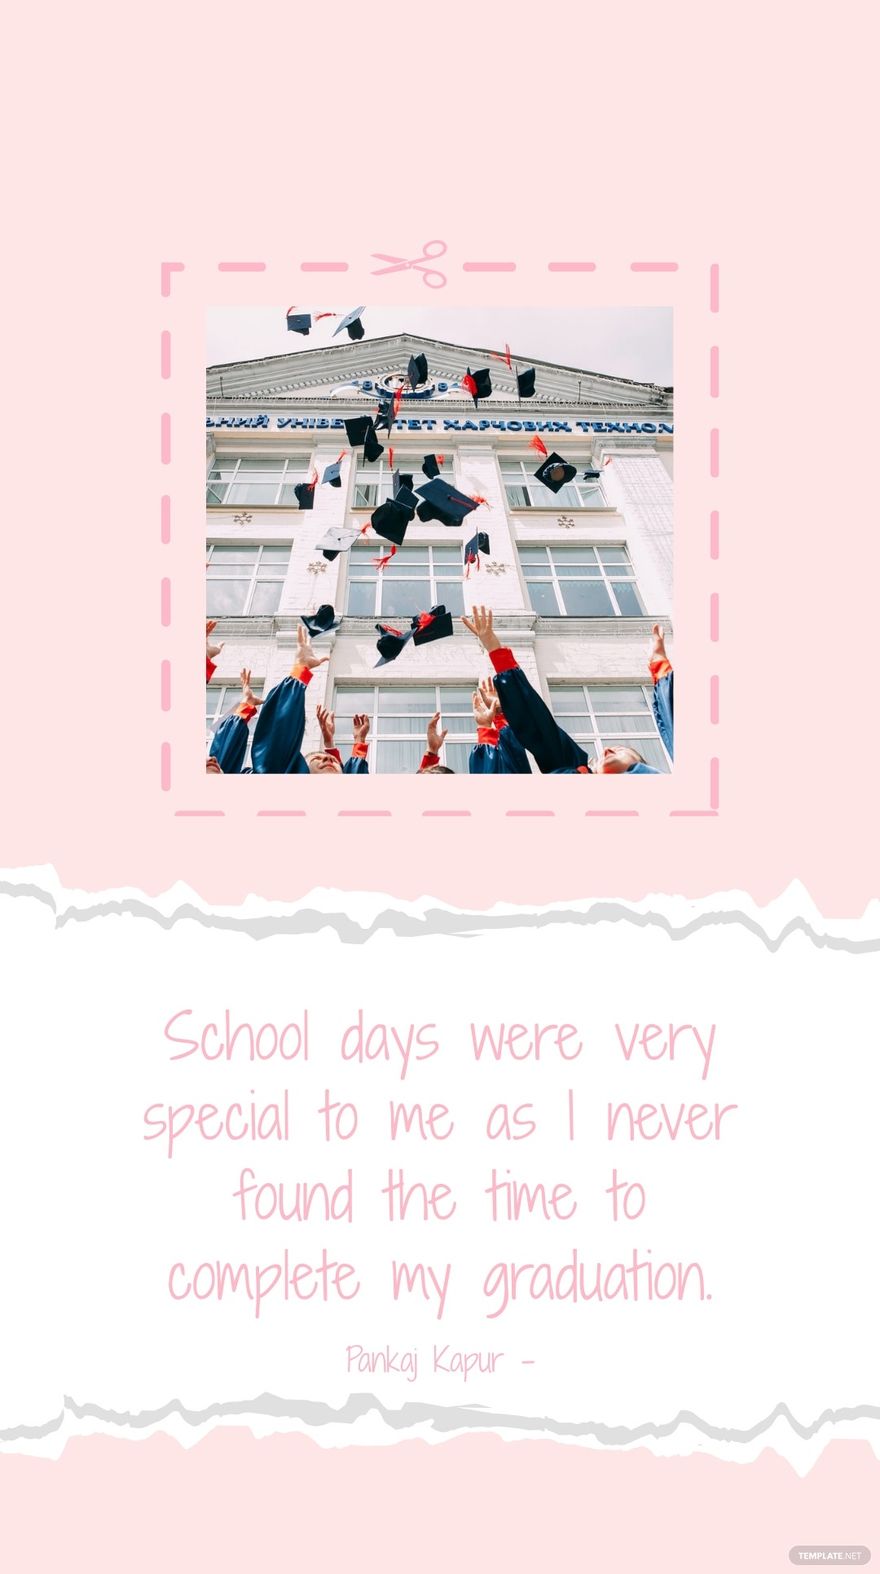 Pankaj Kapur - School days were very special to me as I never found the time to complete my graduation.